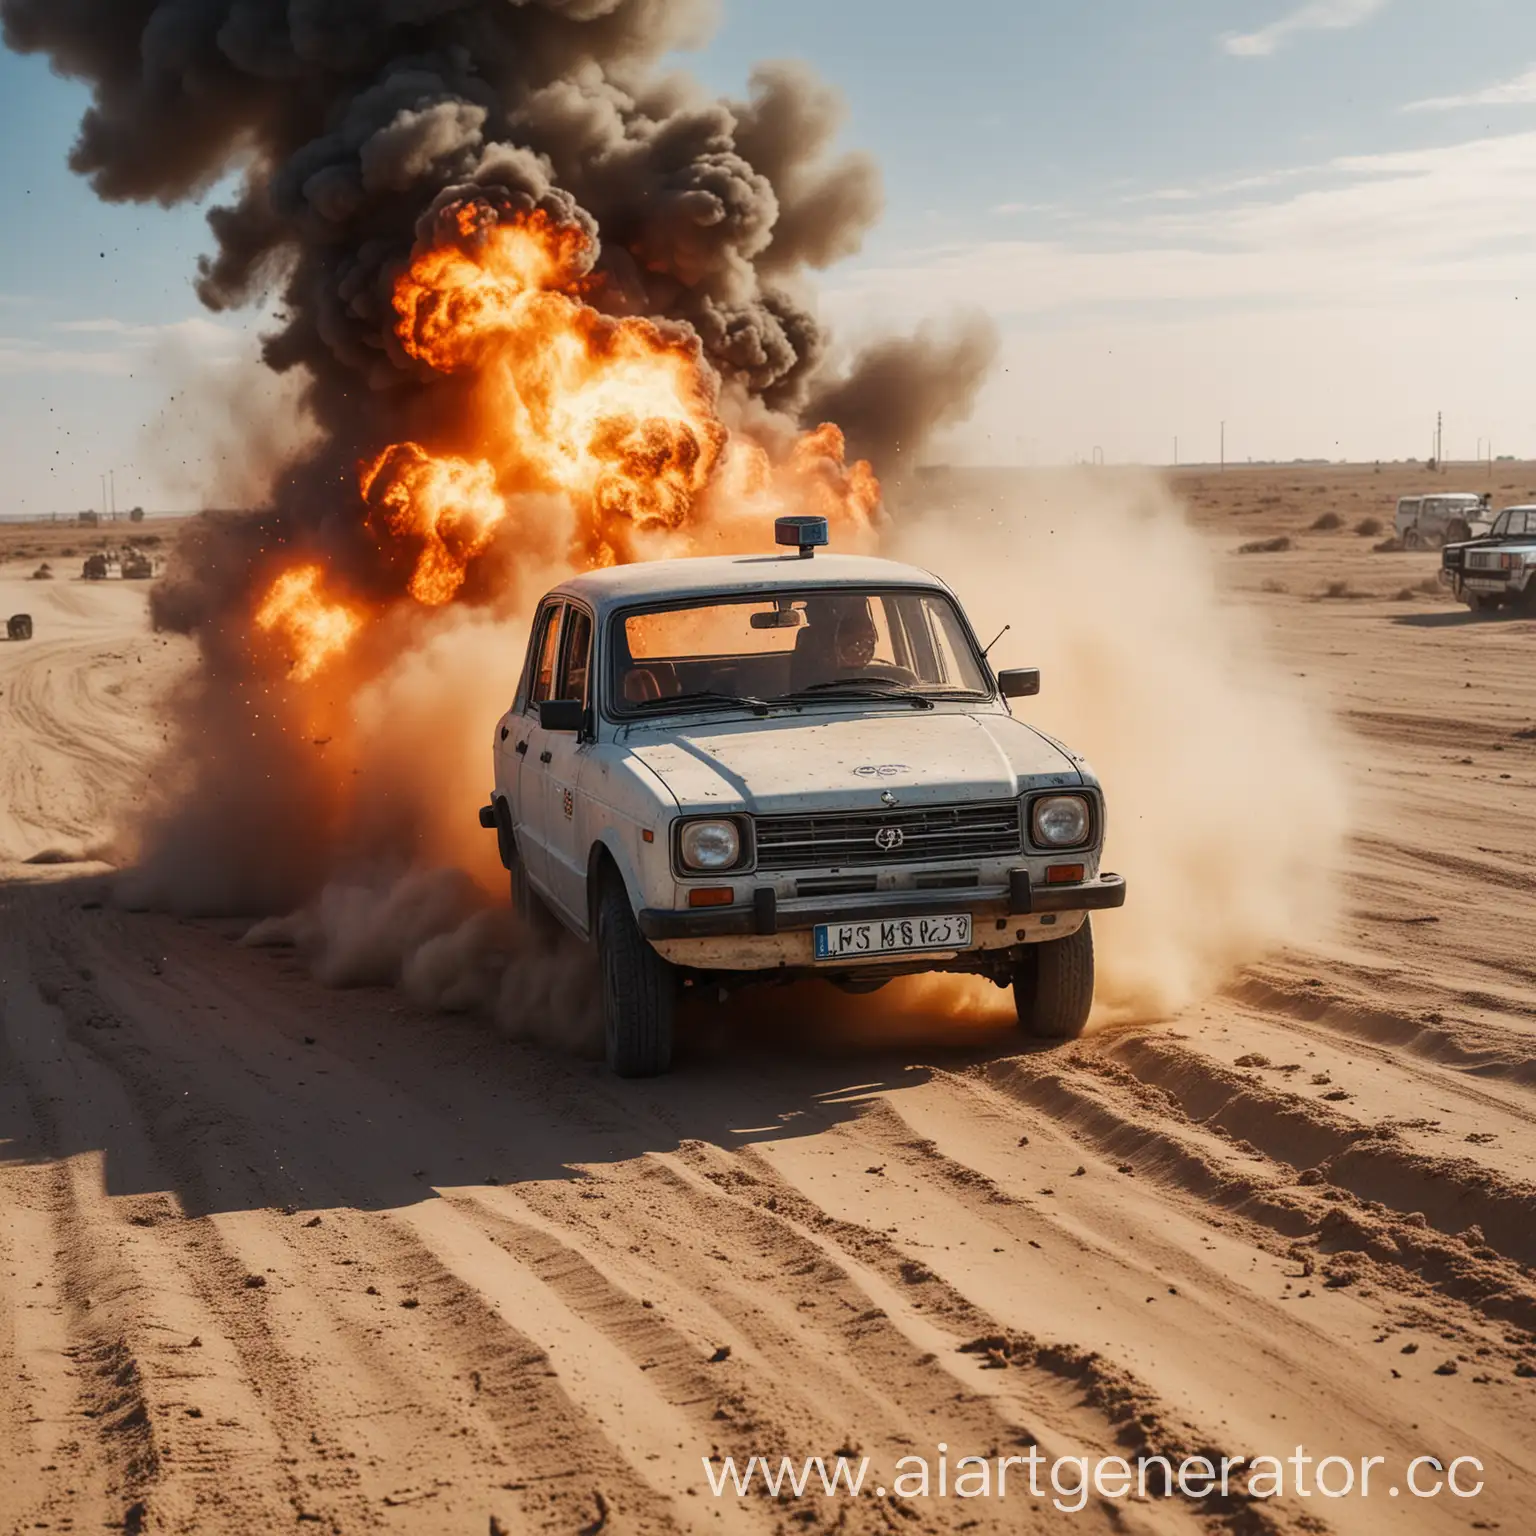 HighSpeed-Chase-Lada-Racing-Through-Explosive-Desert-Pursuit